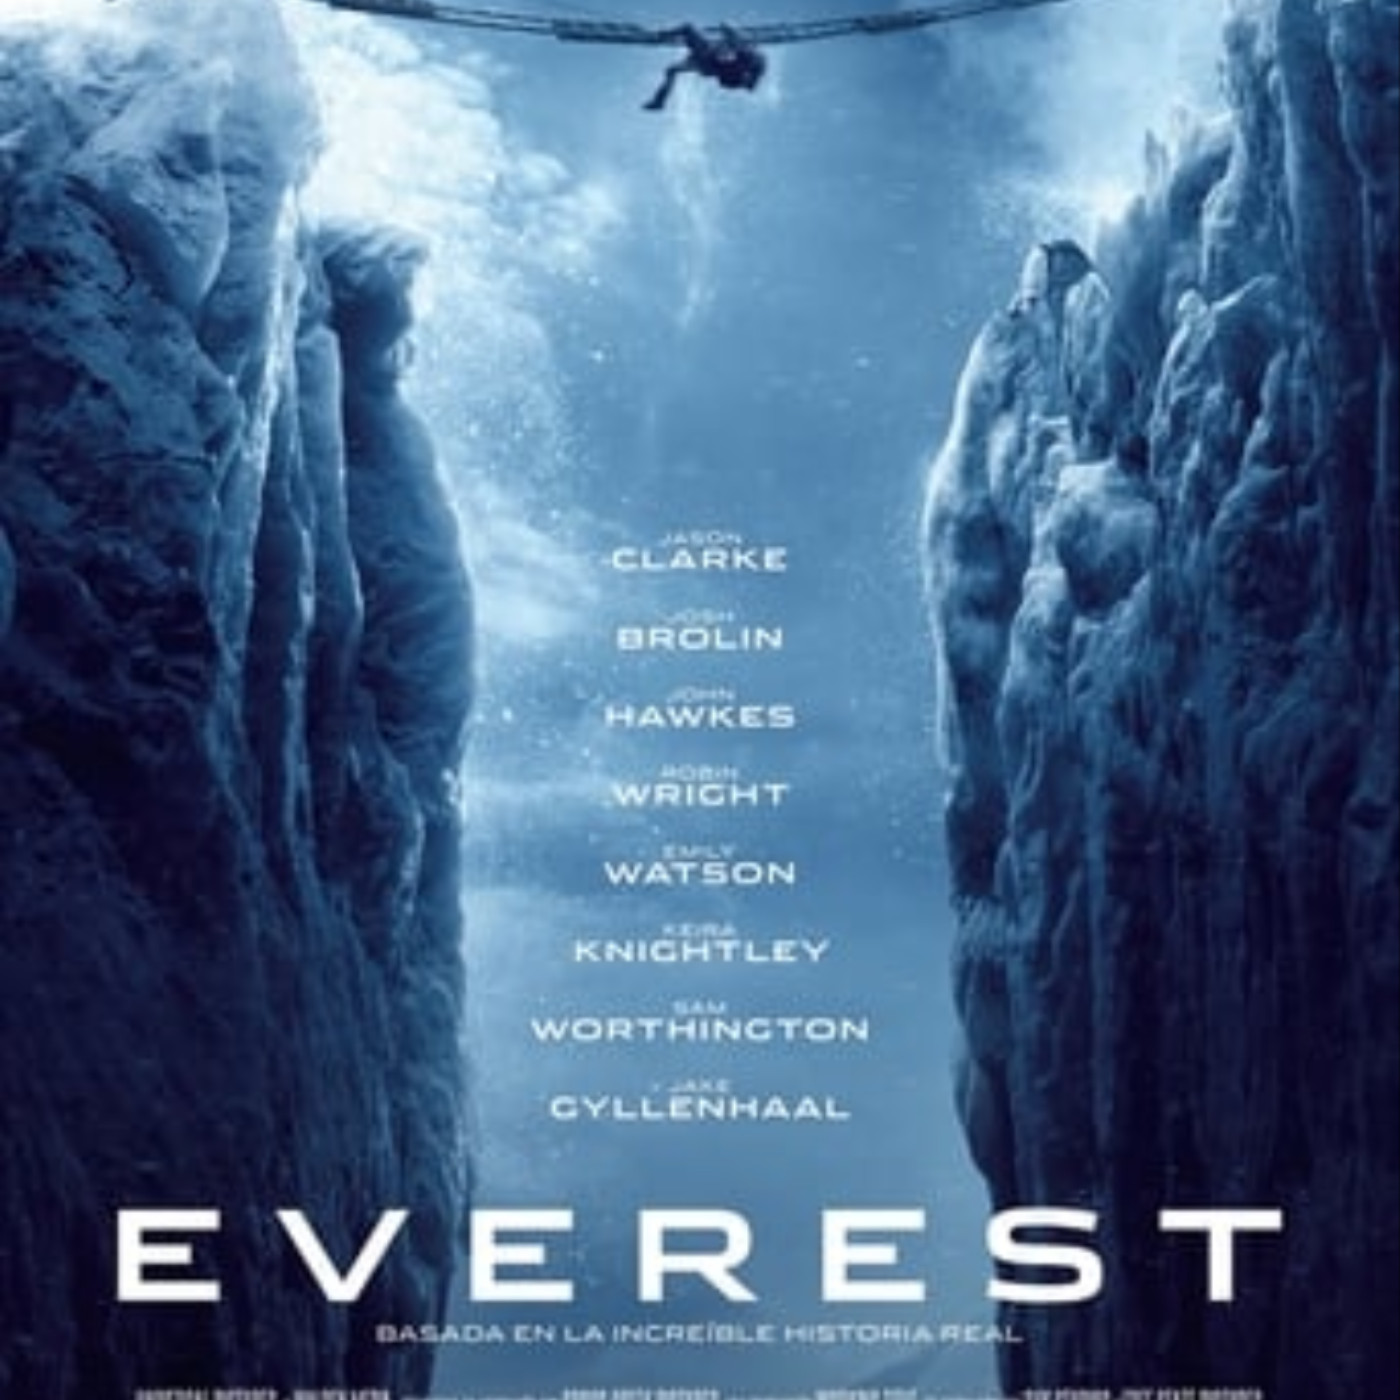 HDQ] Everest pelicula completa en español gratis Gnula | Podcast on SoundOn